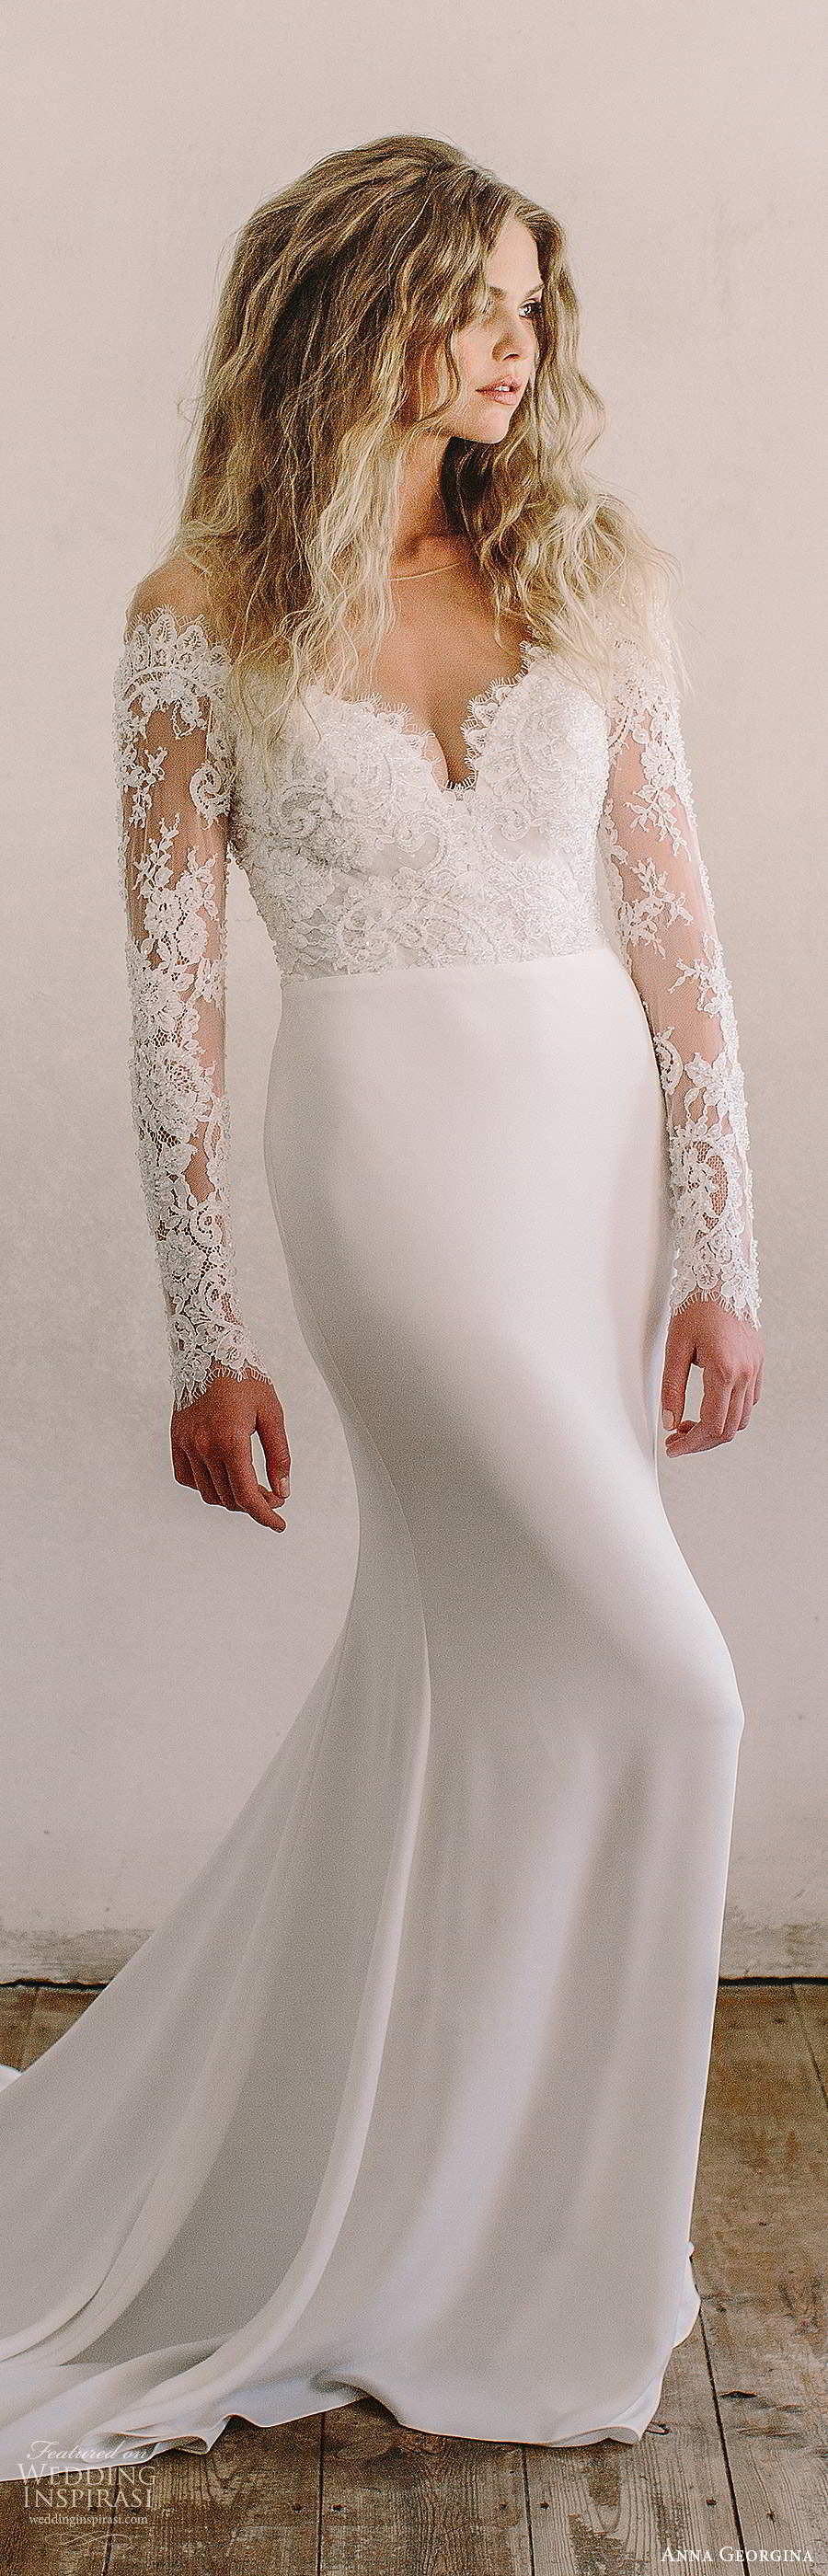 anna georgina 2021 bridal illusion long sleeves off shoulder v neckline lace bodice clean skirt sheath wedding dress chapel train (2) lv